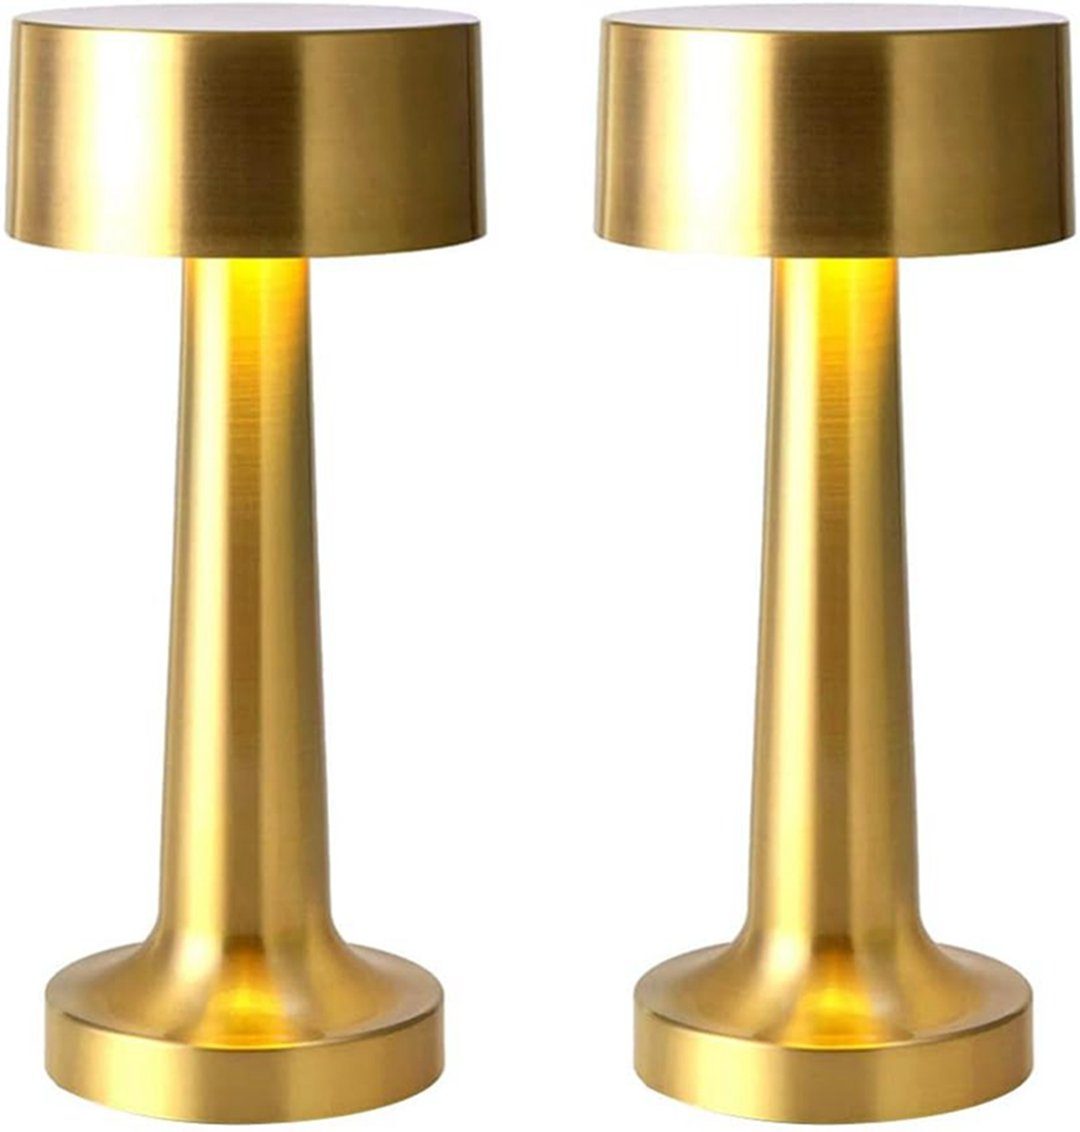 DAYUT LED Tischleuchte 2 Stück LED Tischlampe, dimmbare Gold Vintage Tischlampen